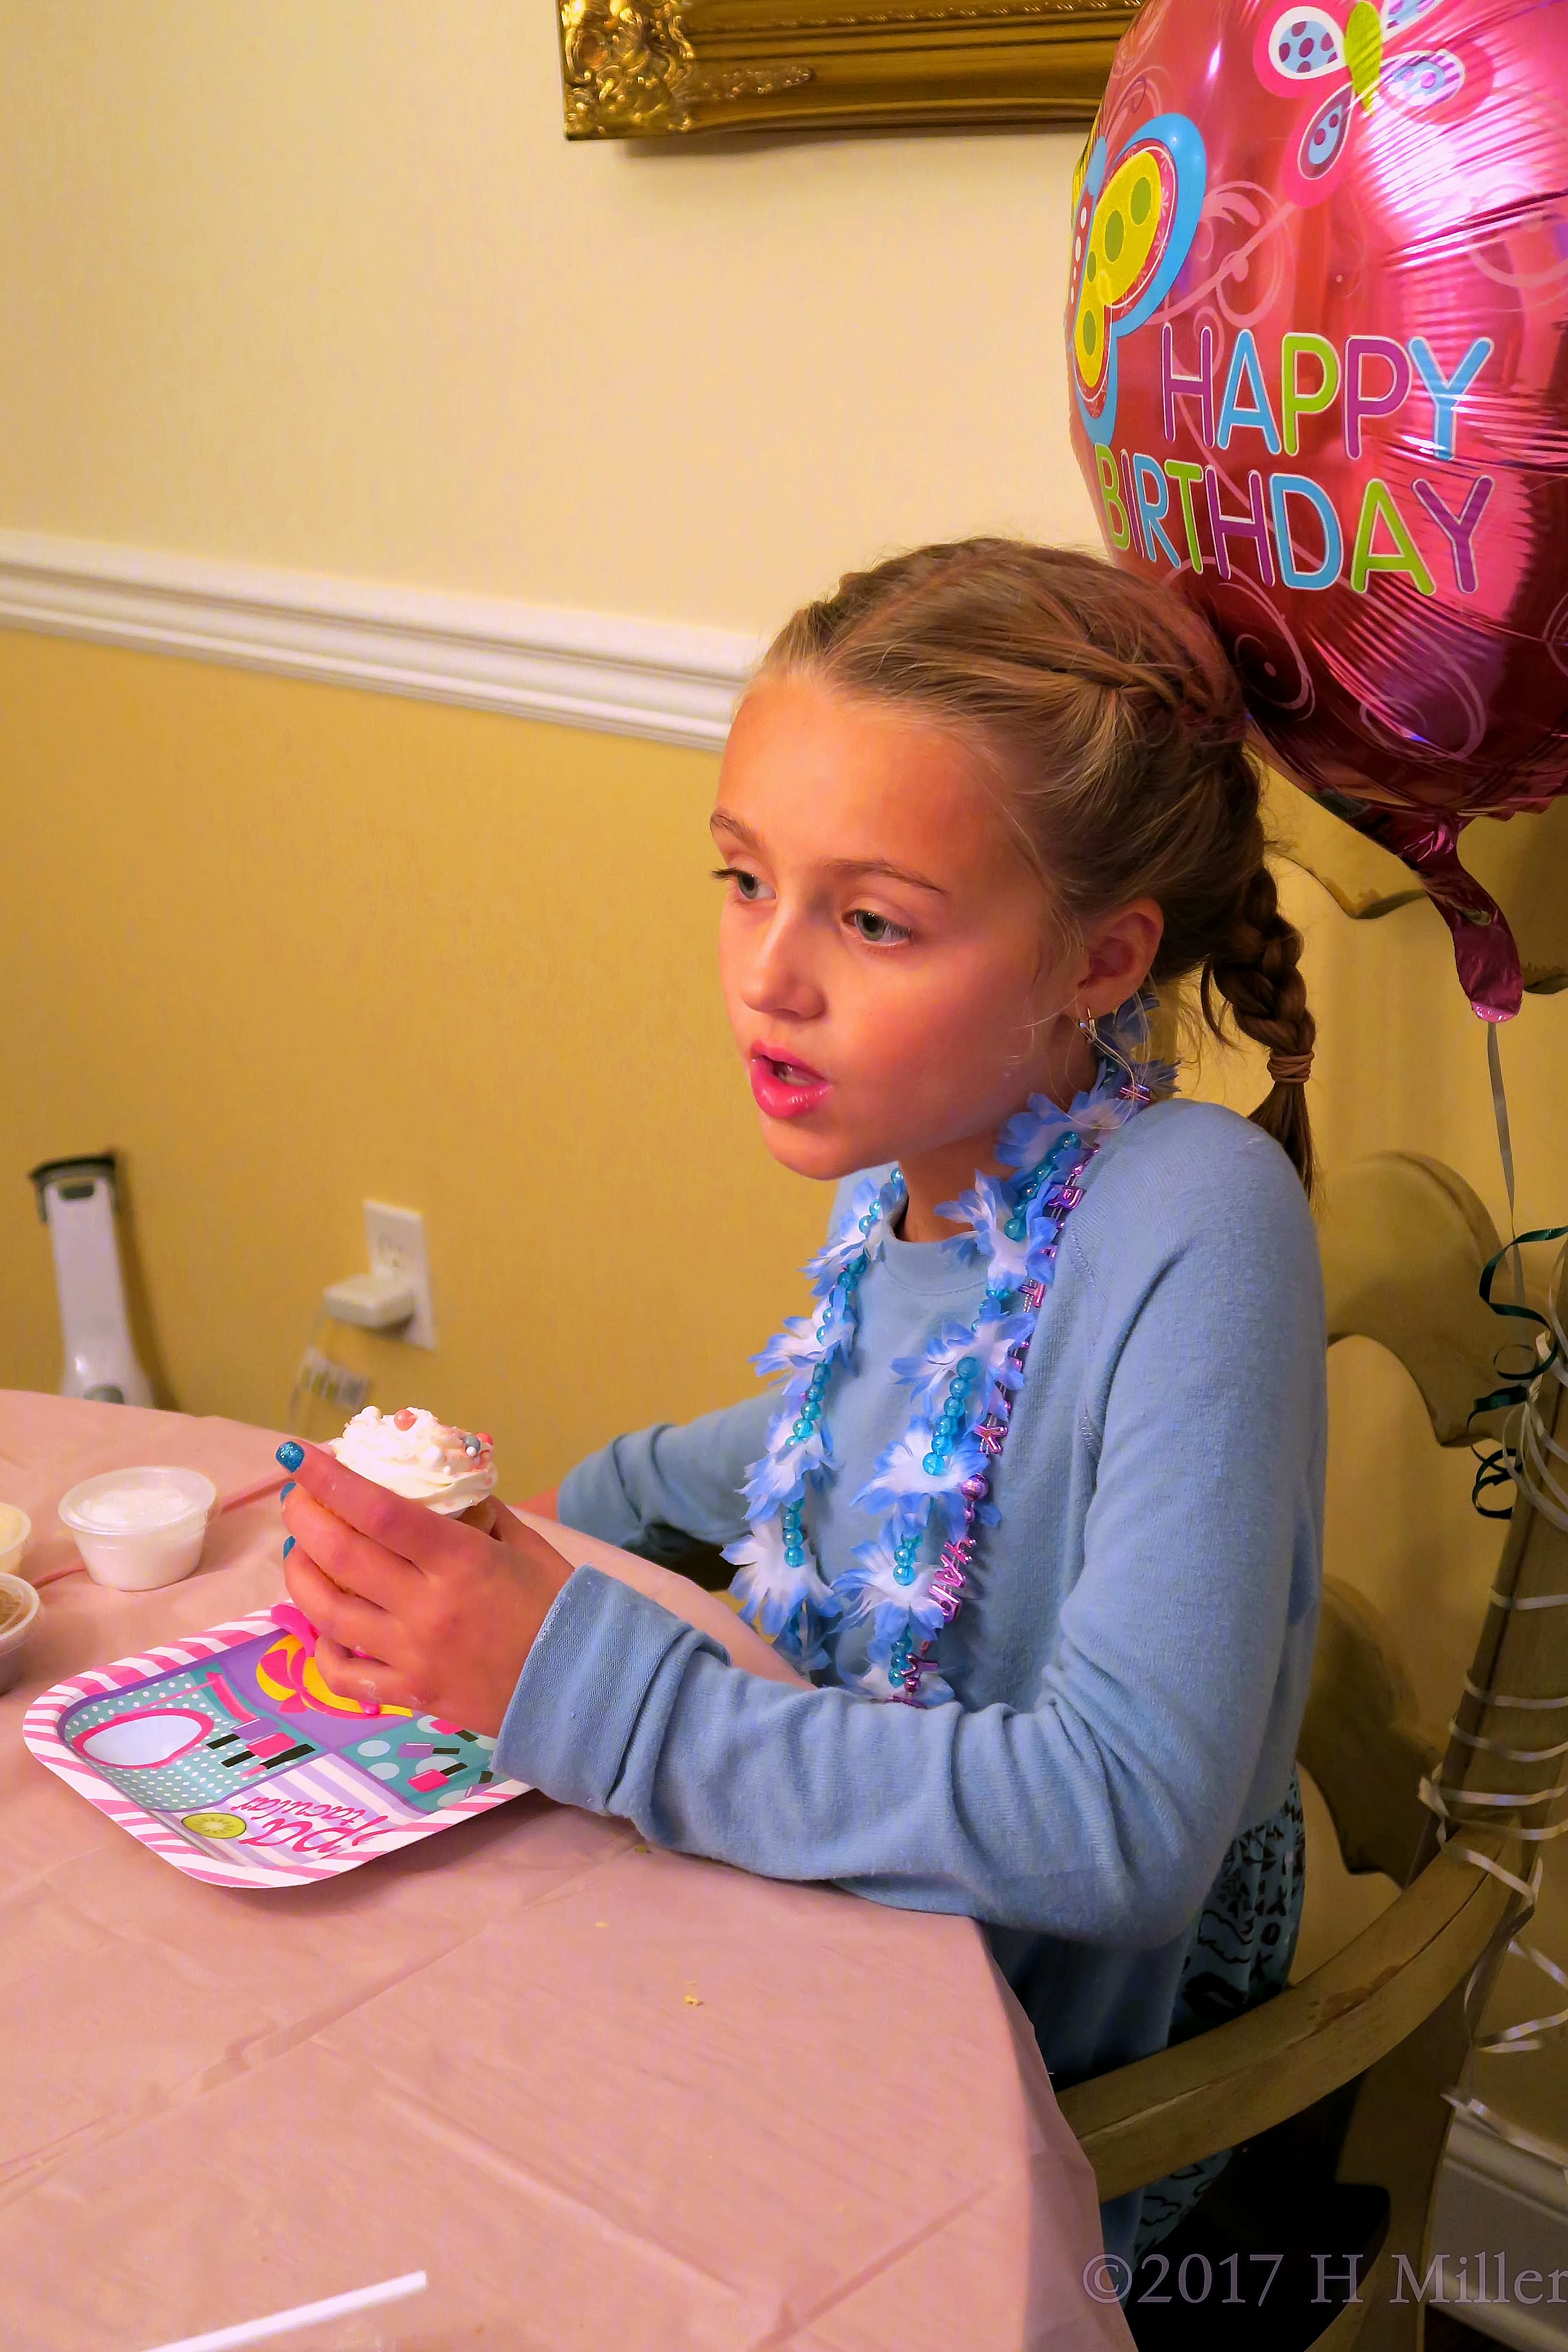 Eating Her Birthday Cake 